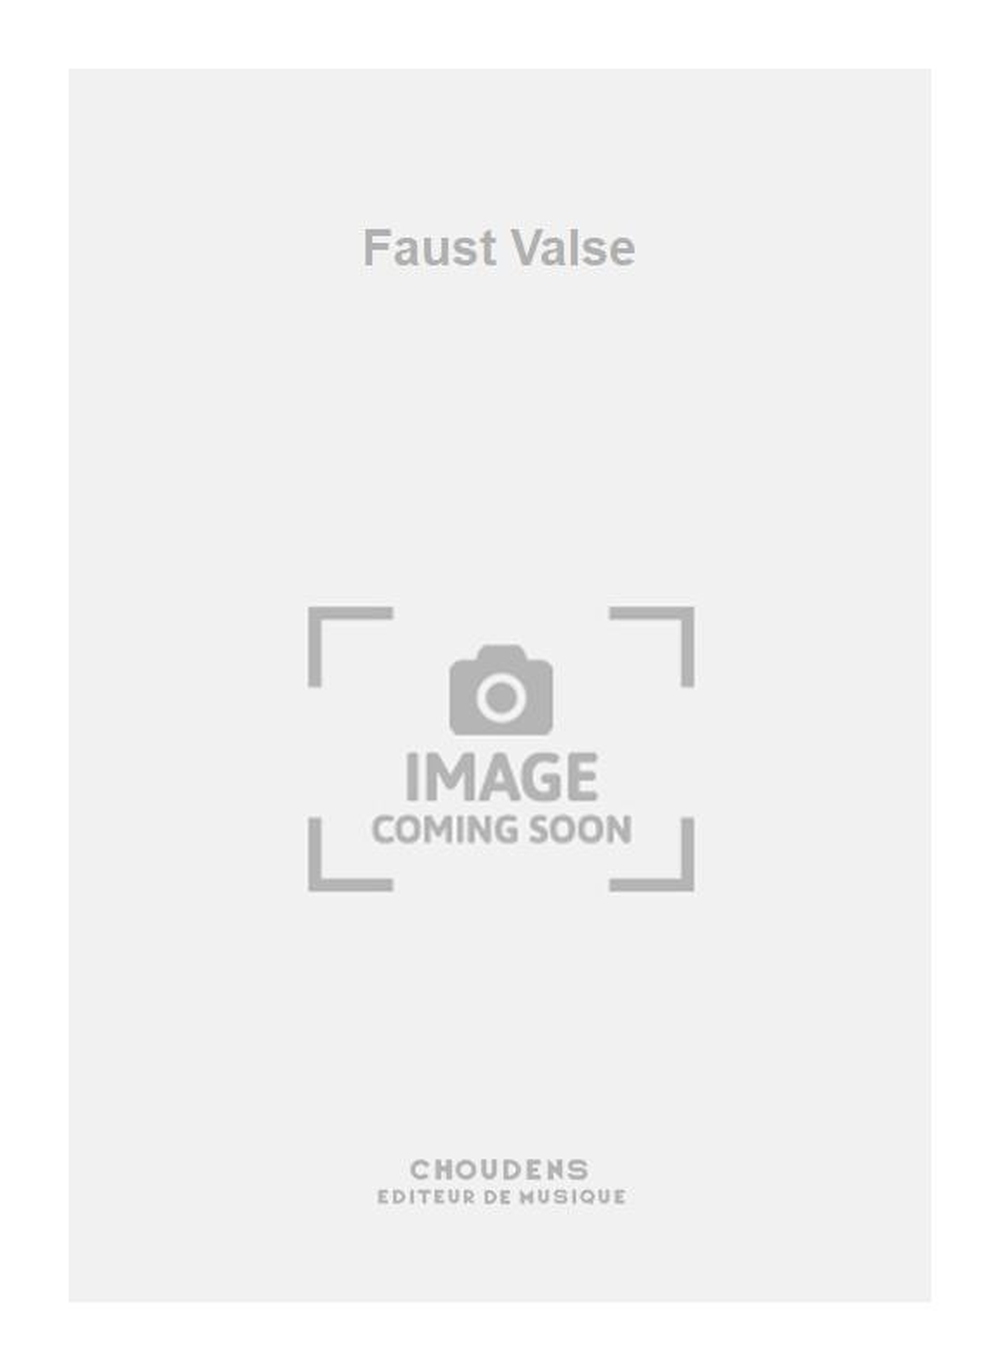 Charles Gounod: Faust Valse: Accordion Ensemble